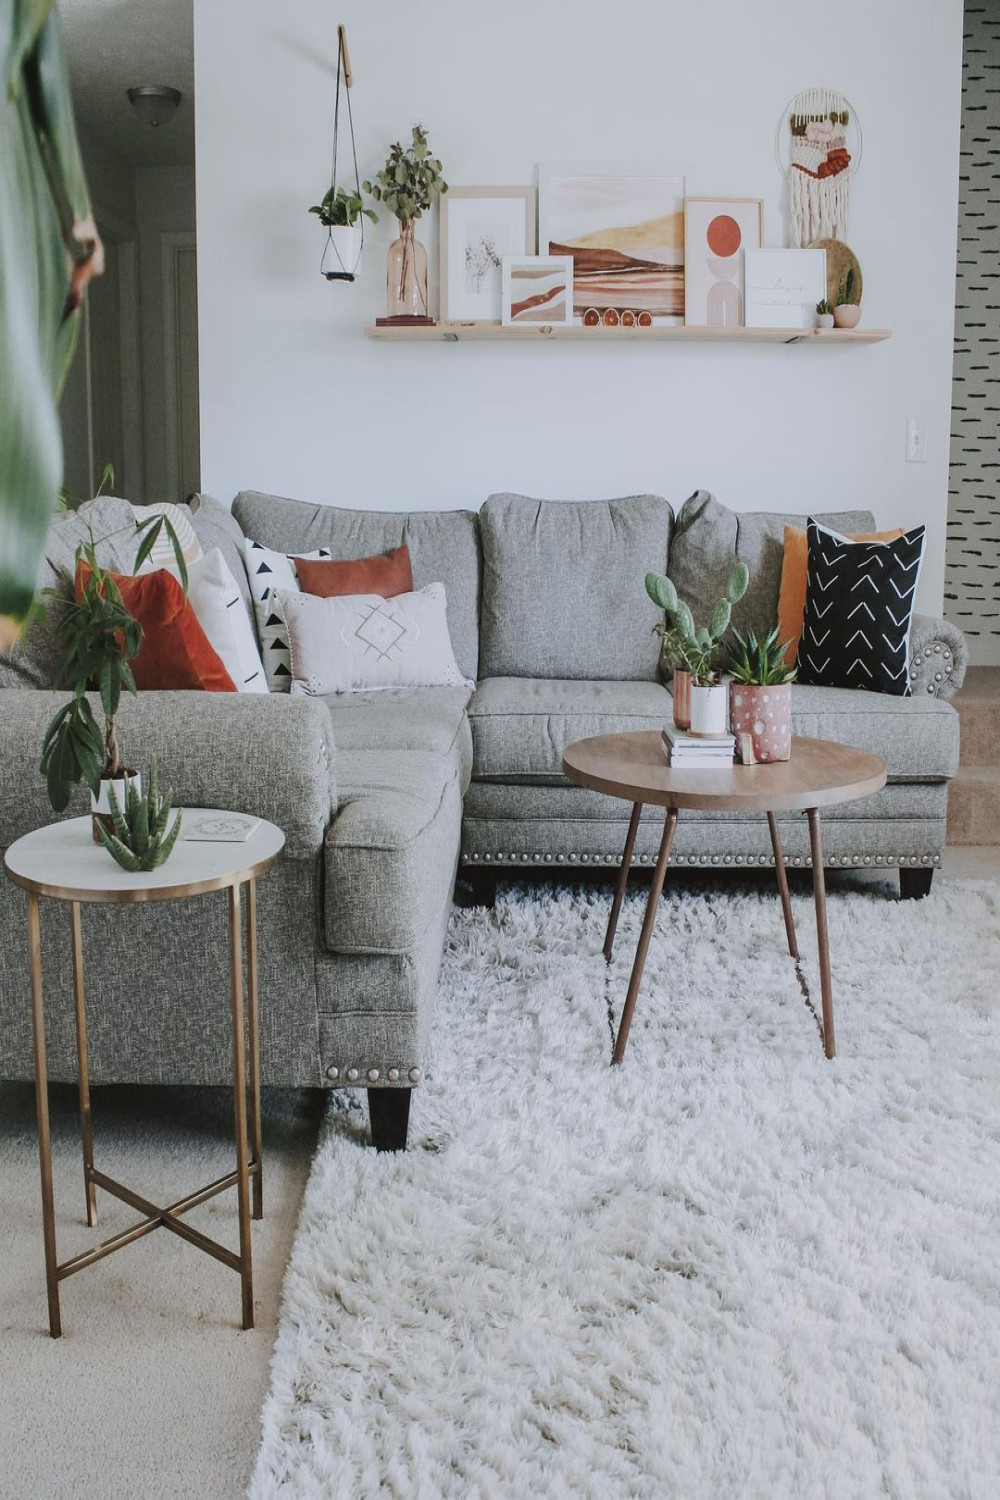 Living Room Carpet Ideas